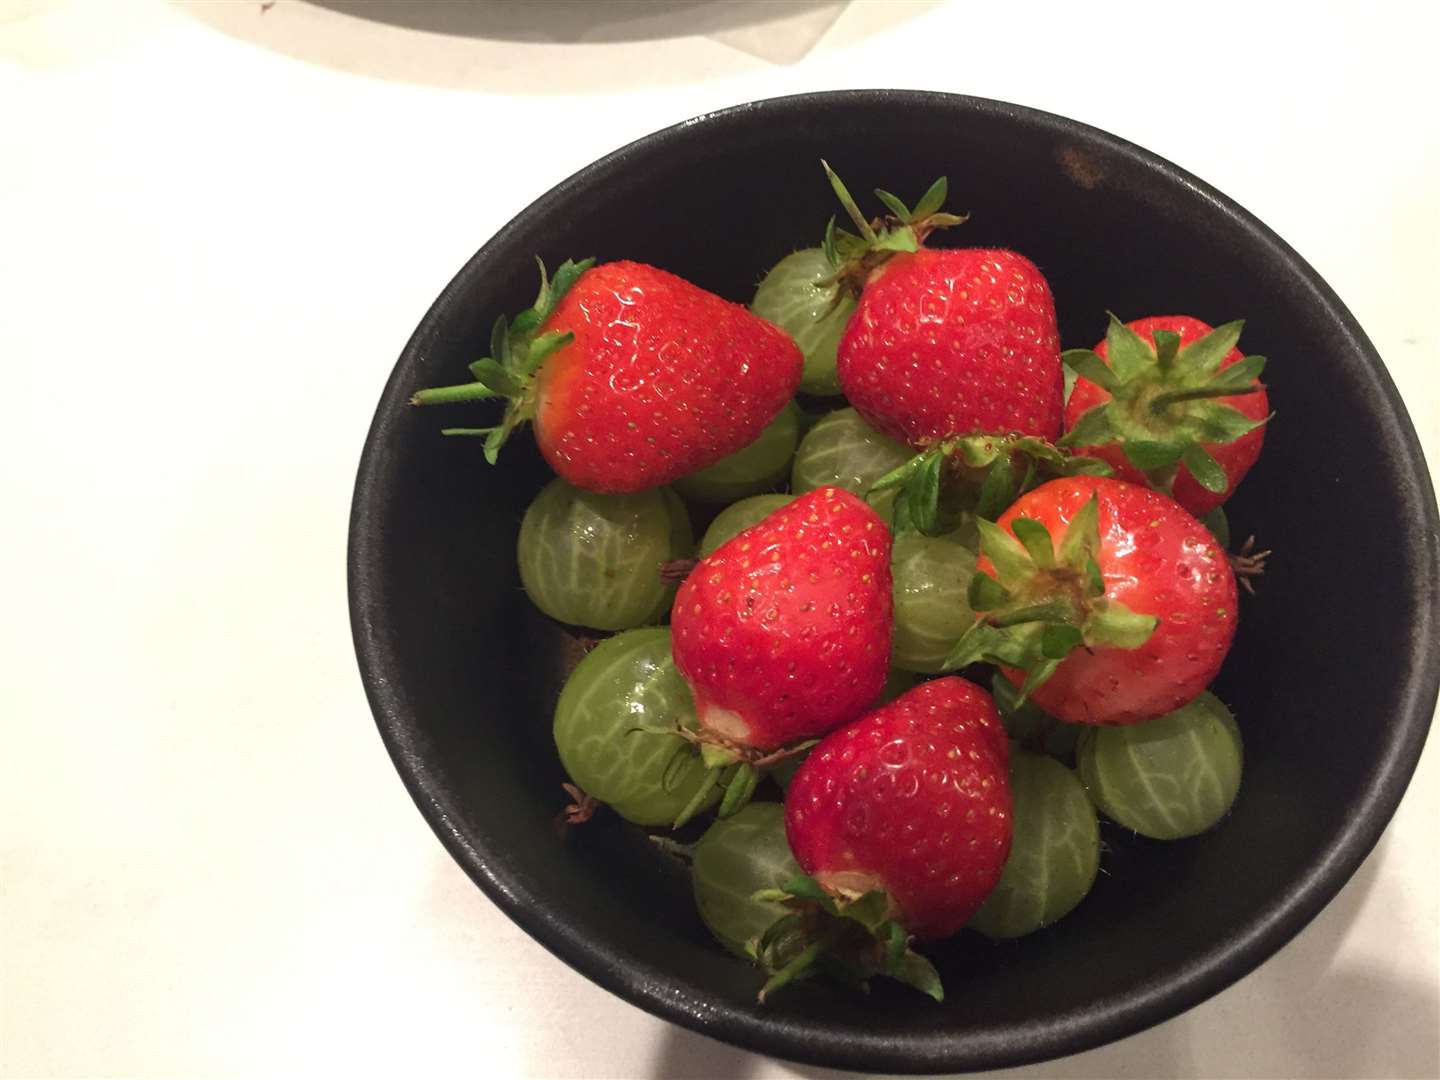 A very fresh breakfast of strawberries and gooseberries